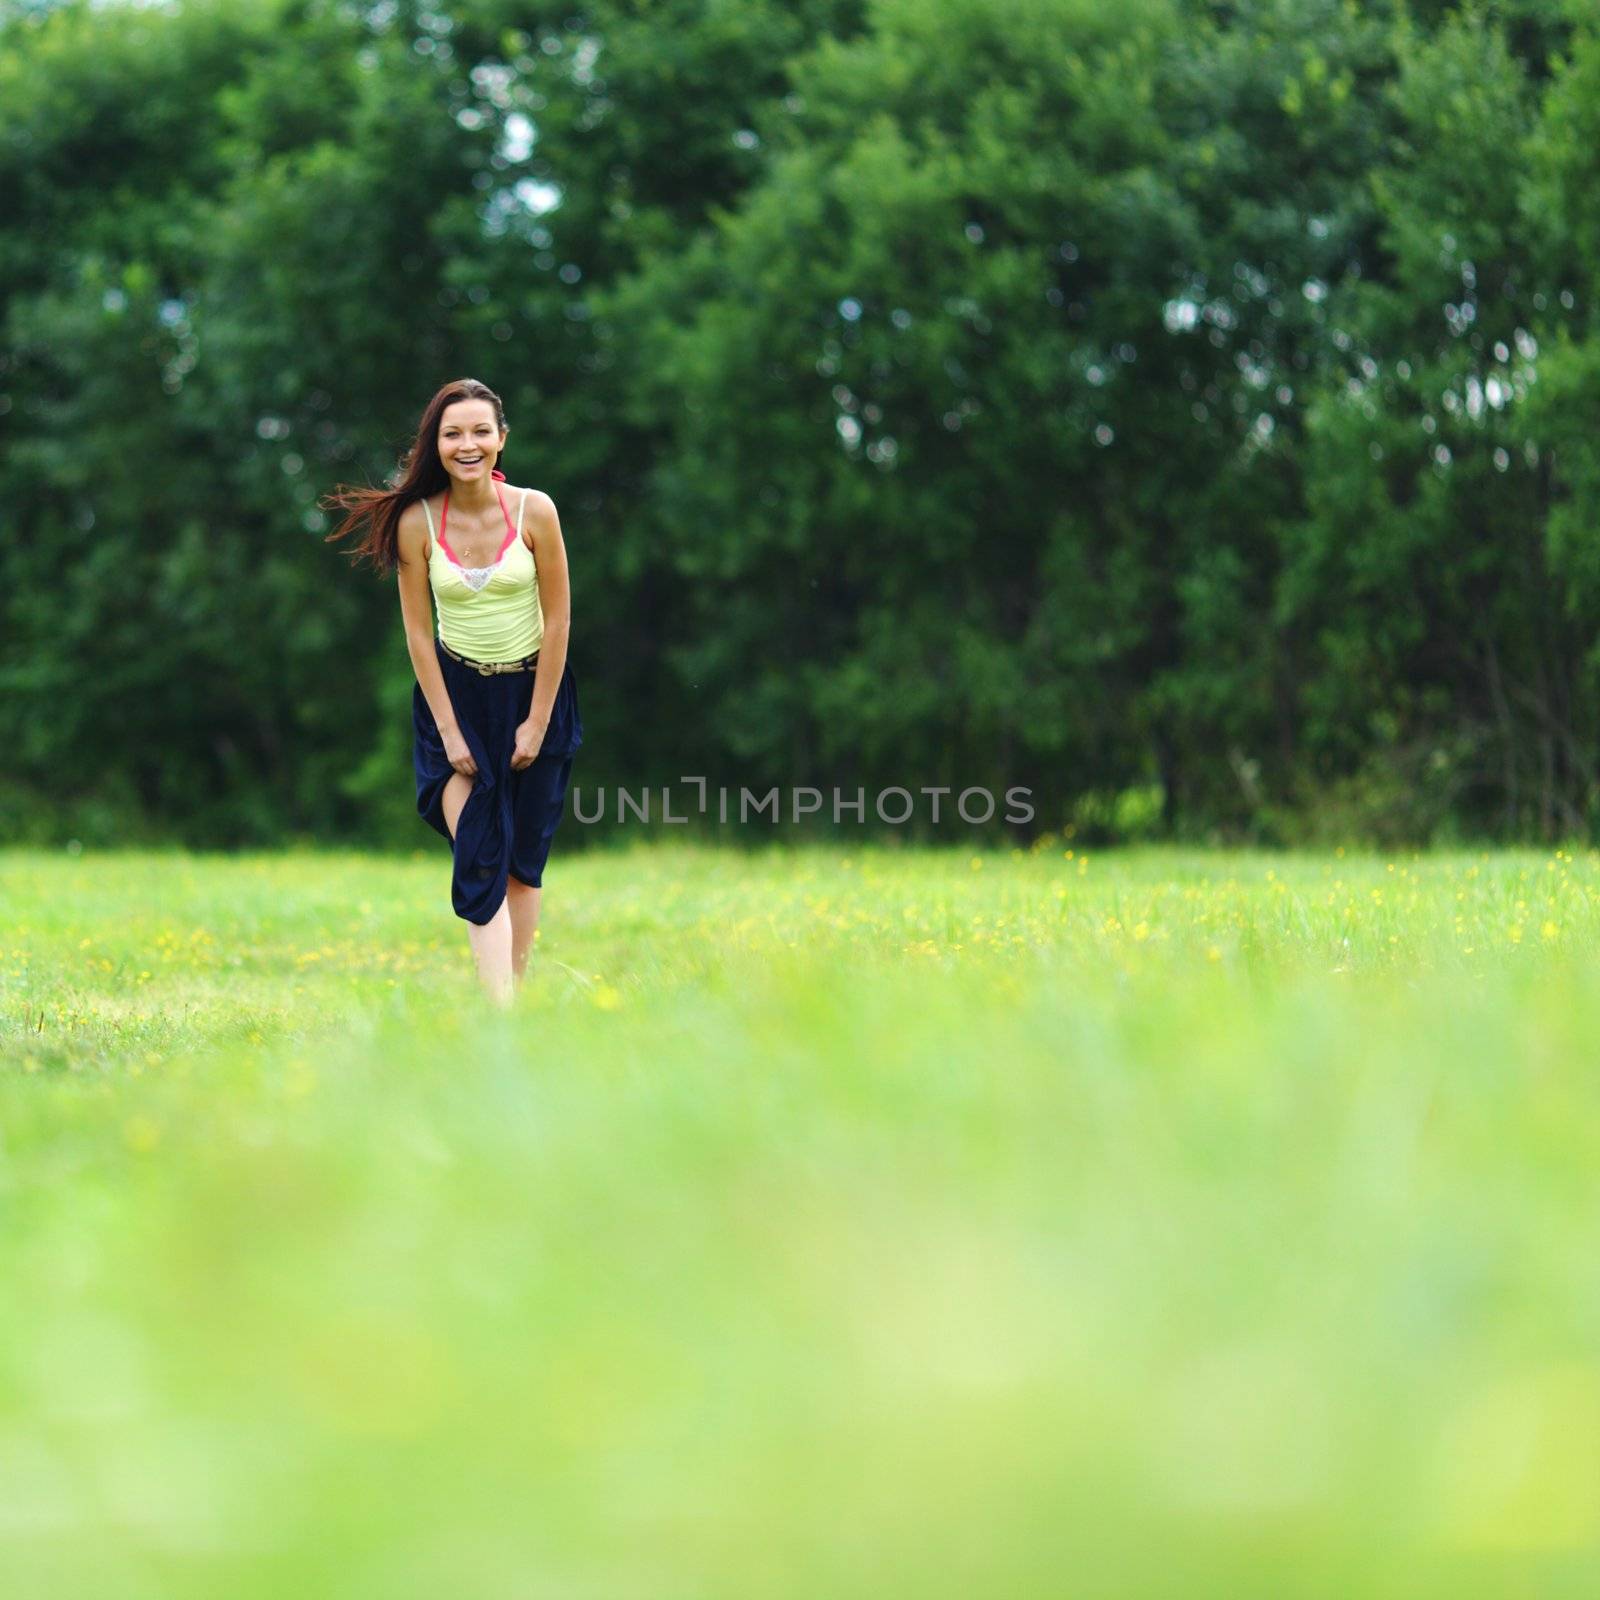 woman on green grass field by Yellowj